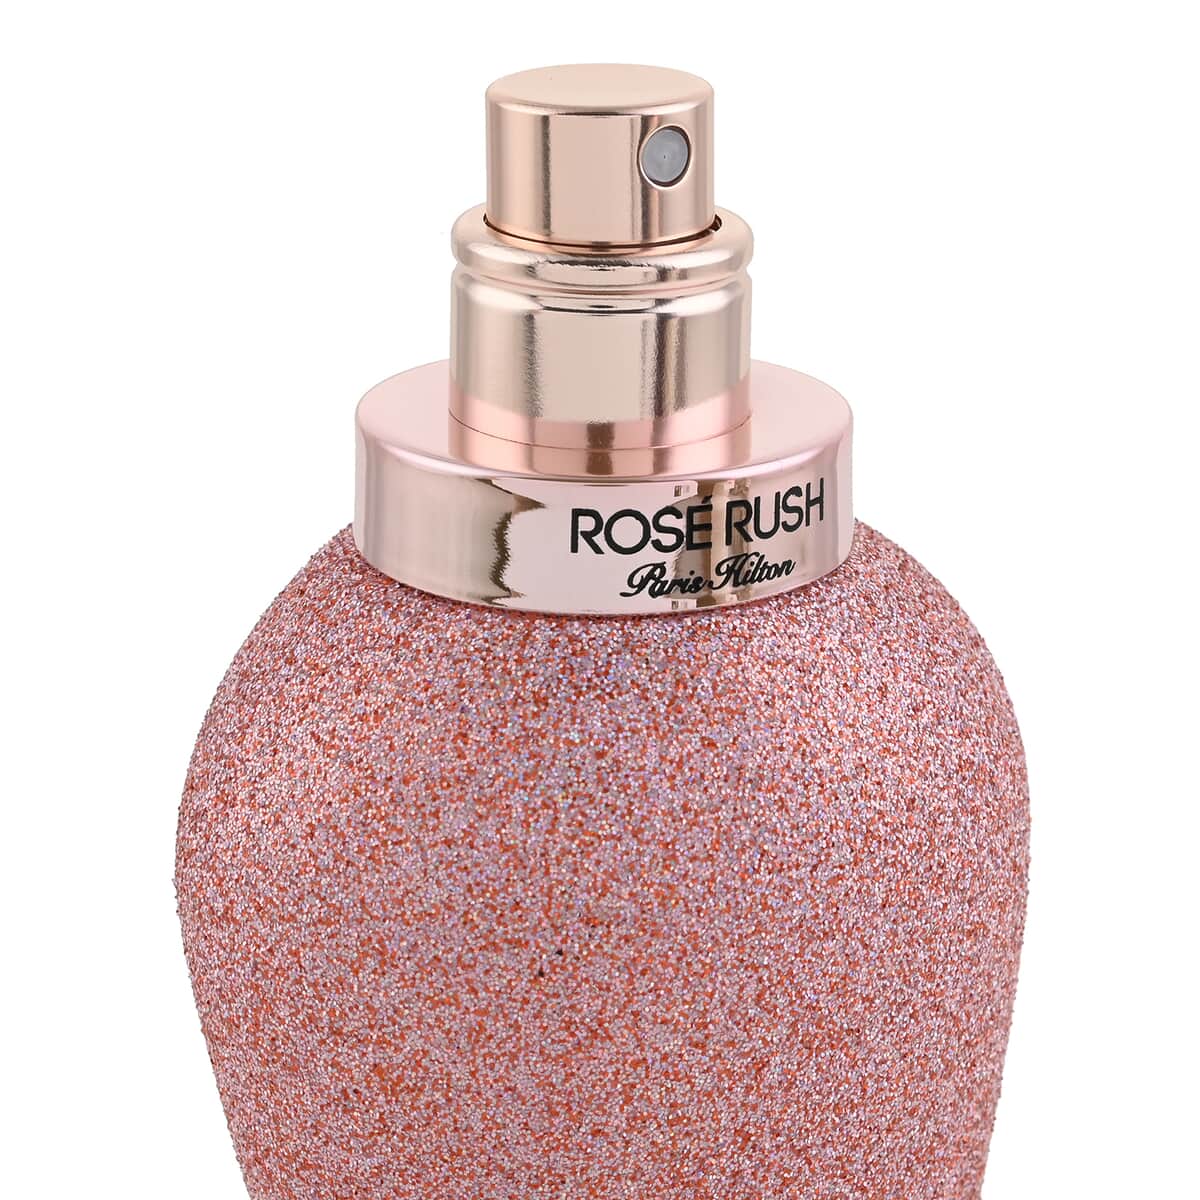 PARIS HILTON ROSE RUSH Eau De Parfum Spray 3.4 oz, Romantic Rose and Amber Scent image number 1